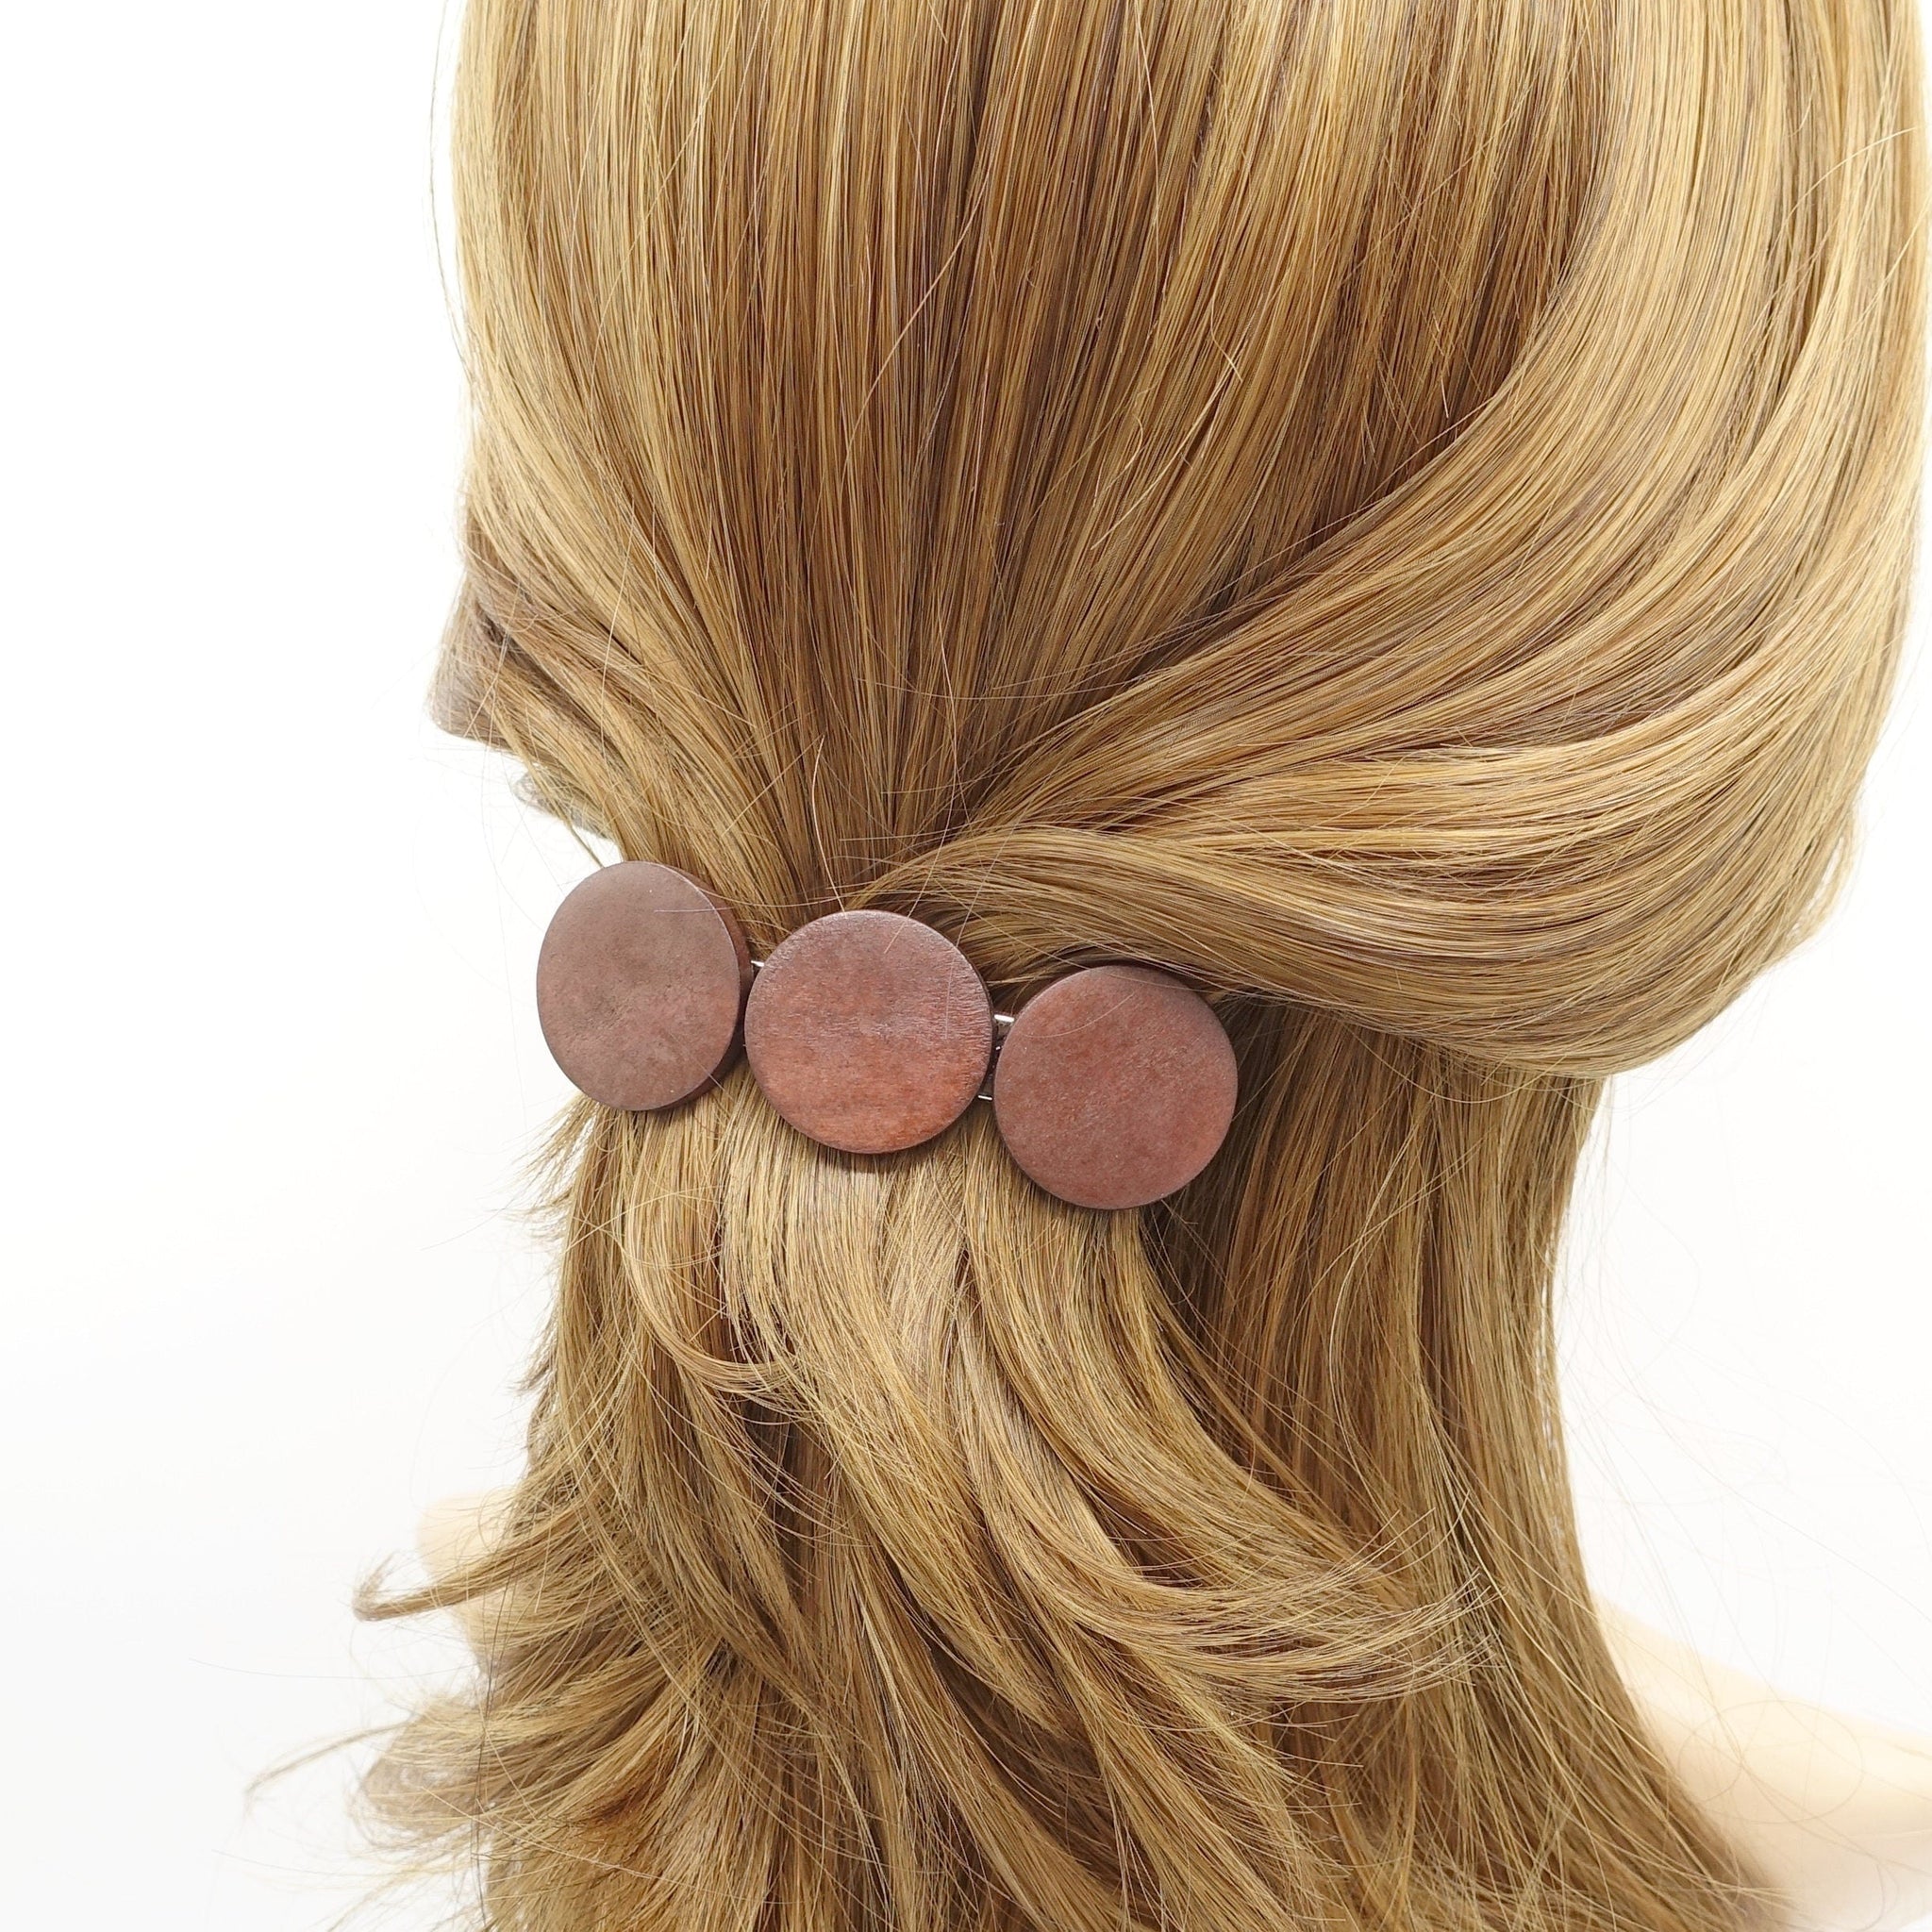 veryshine.com Barrette (Bow) Brown wood hair barrette circle wood hair accessory for women